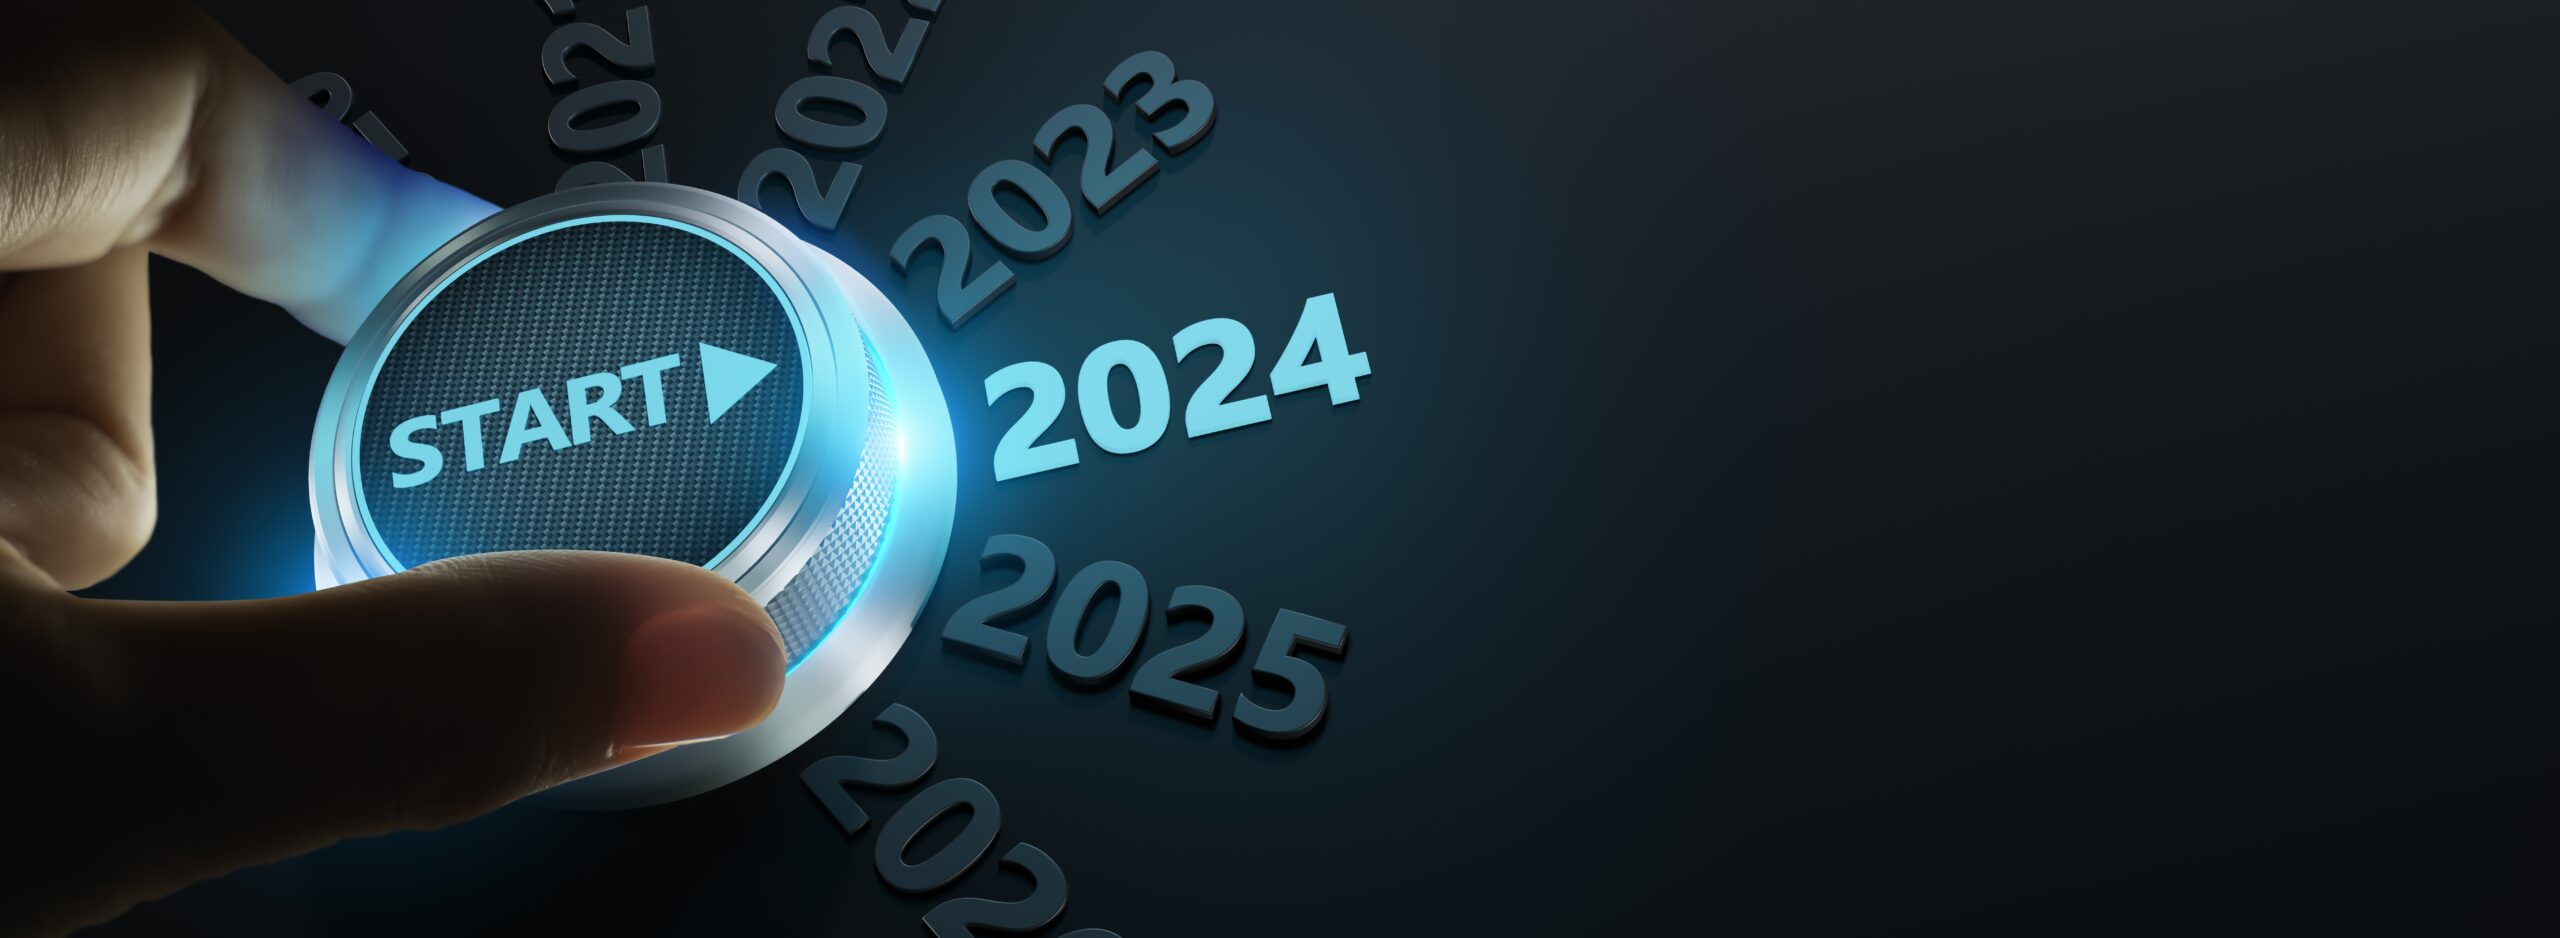 Halo Smart IoT 2023 Highlights